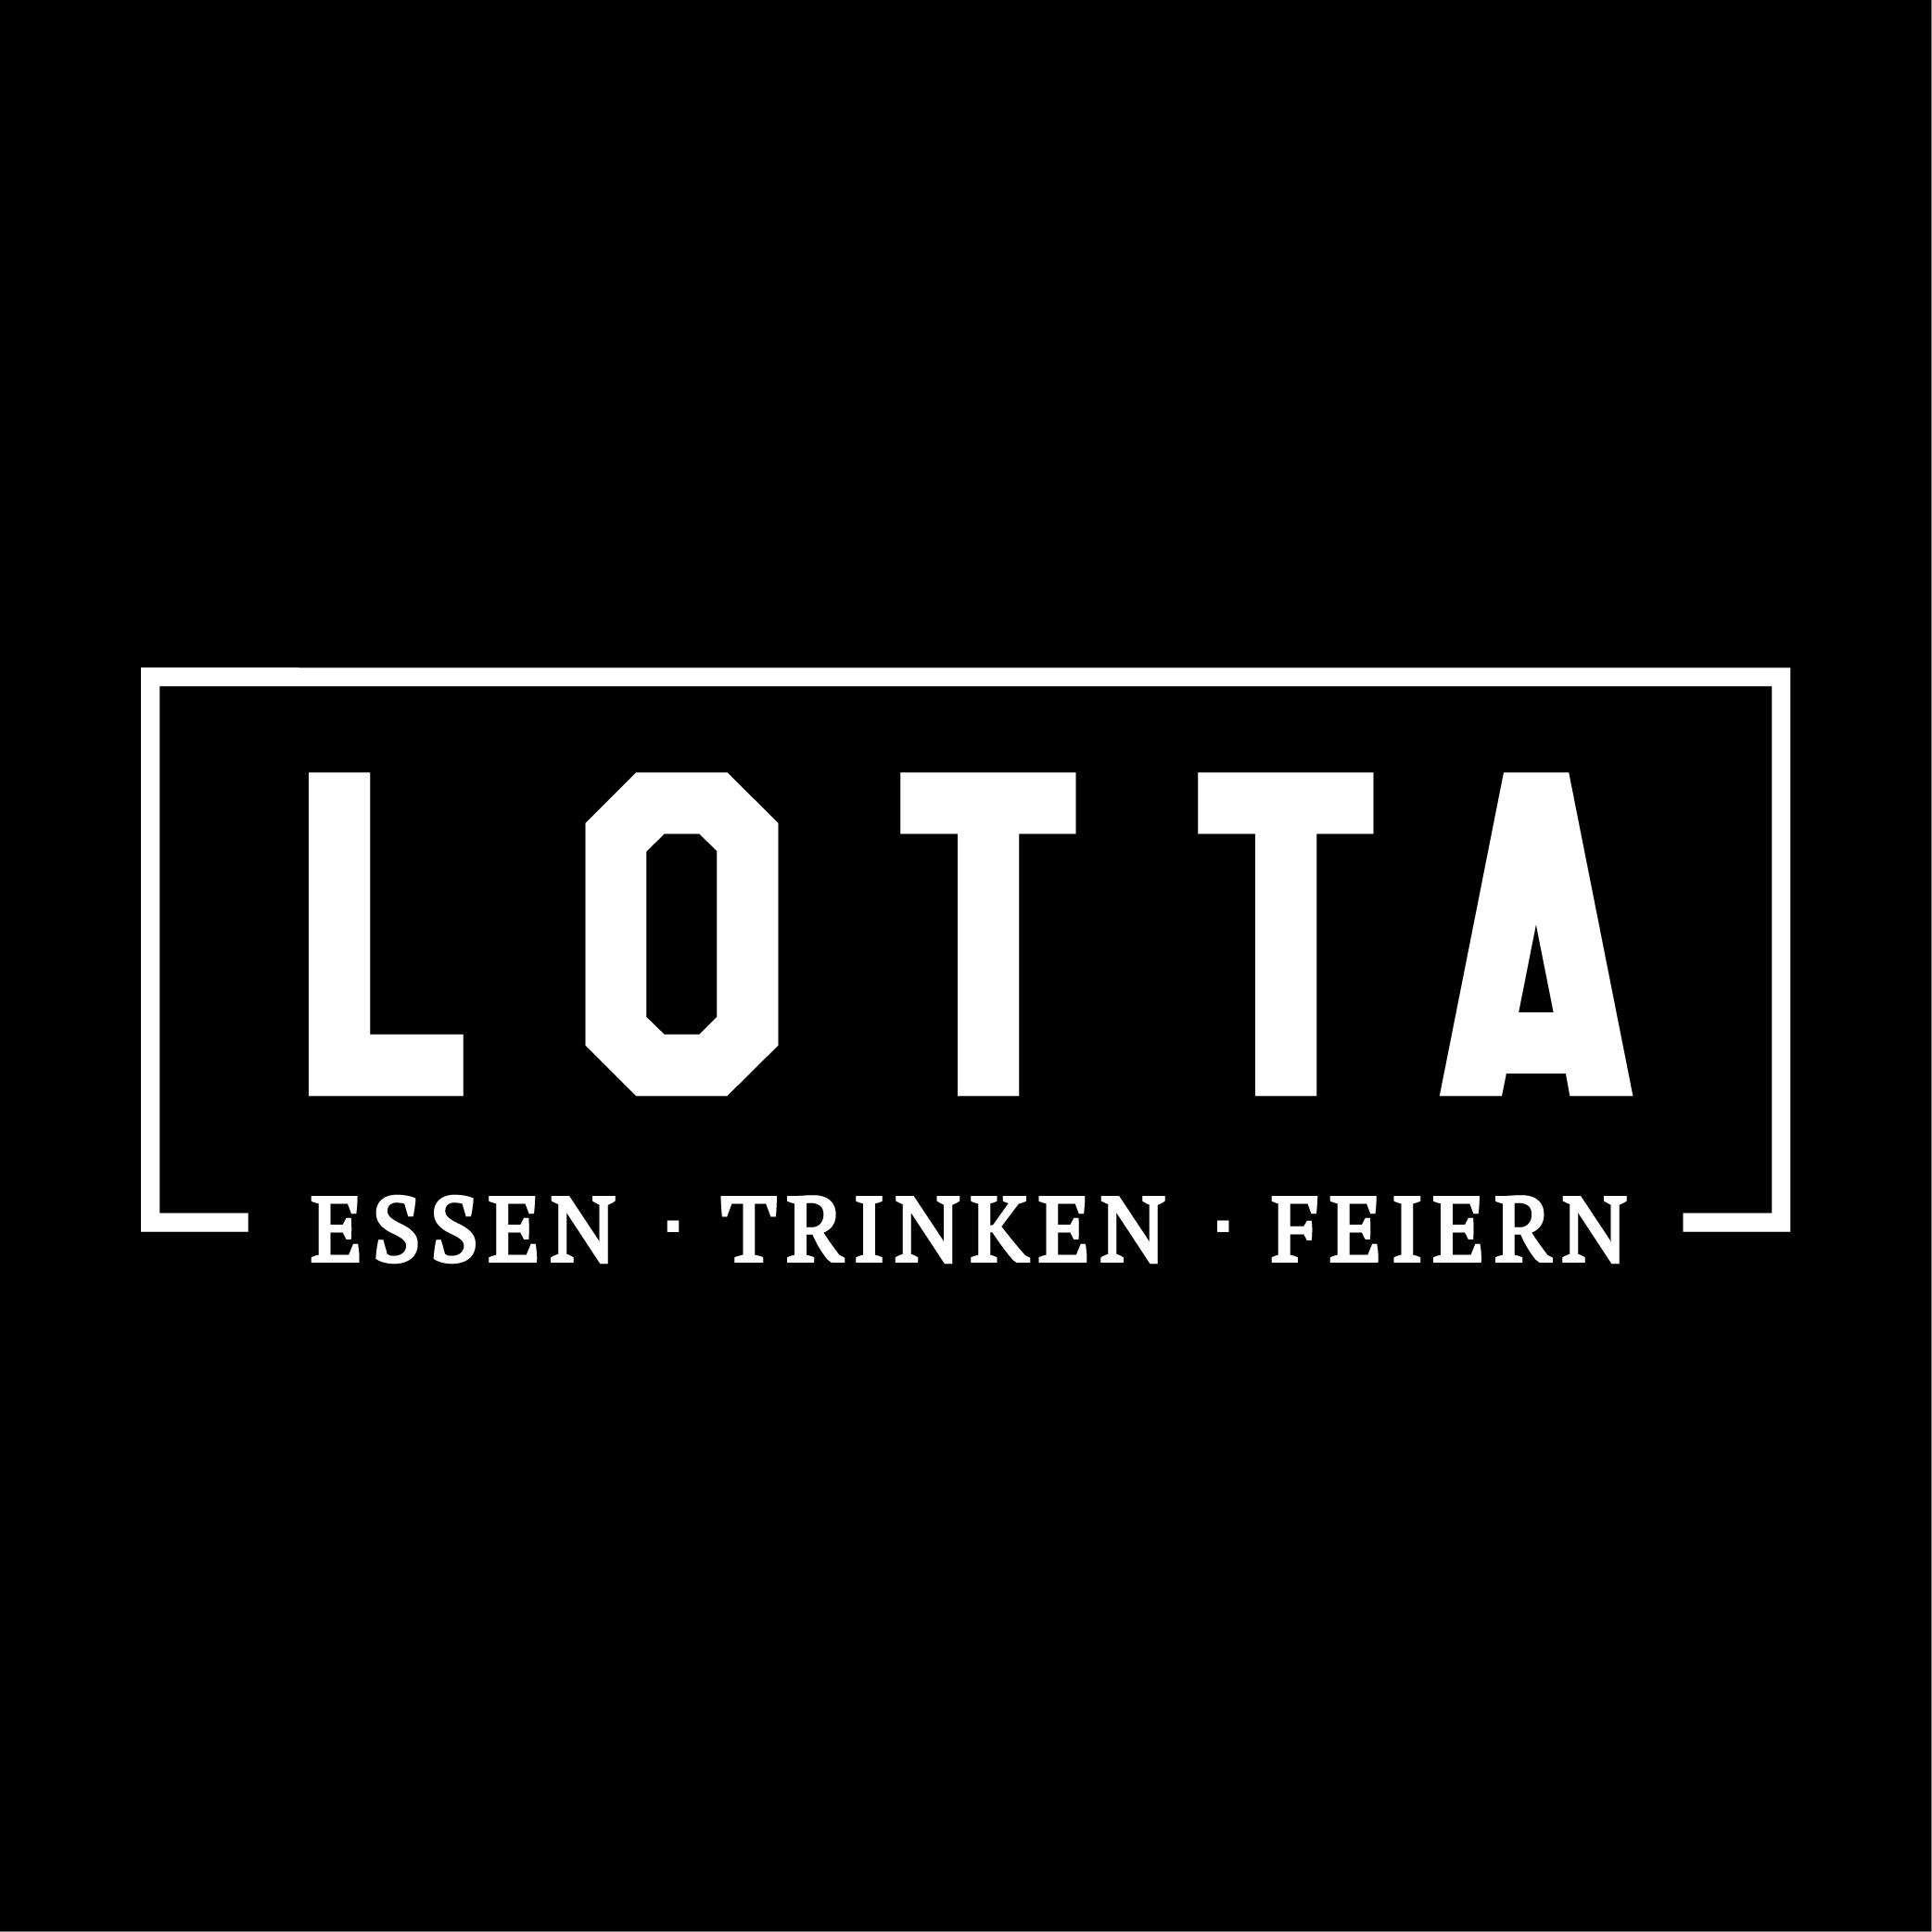 LOTTA Westerberg - Restaurant & Bar in Osnabrück - Logo